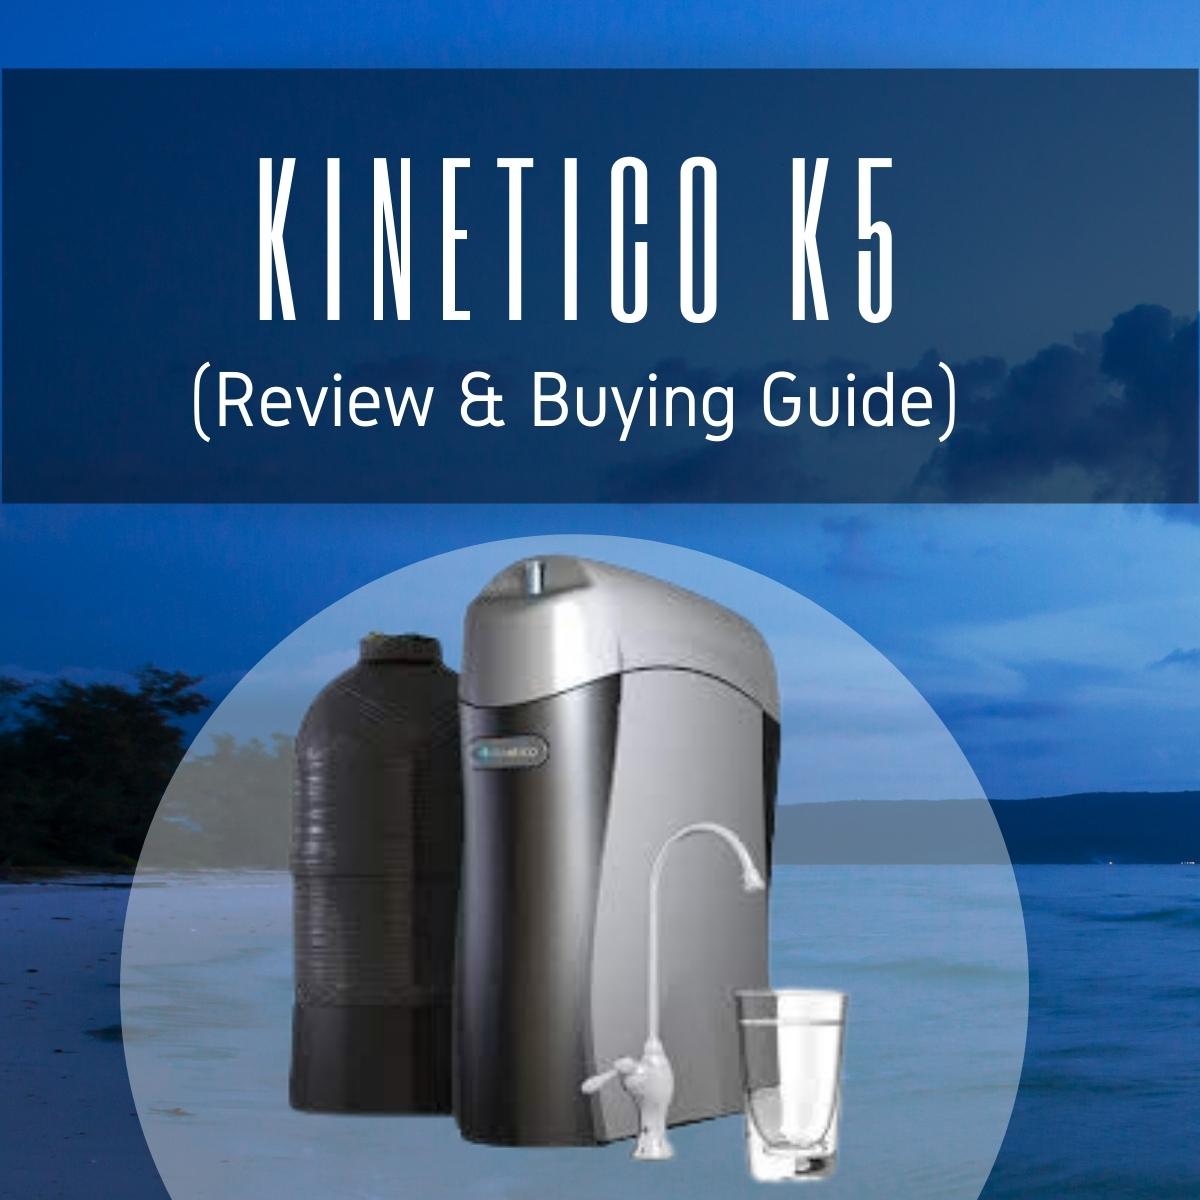 Kinetico K5 Review